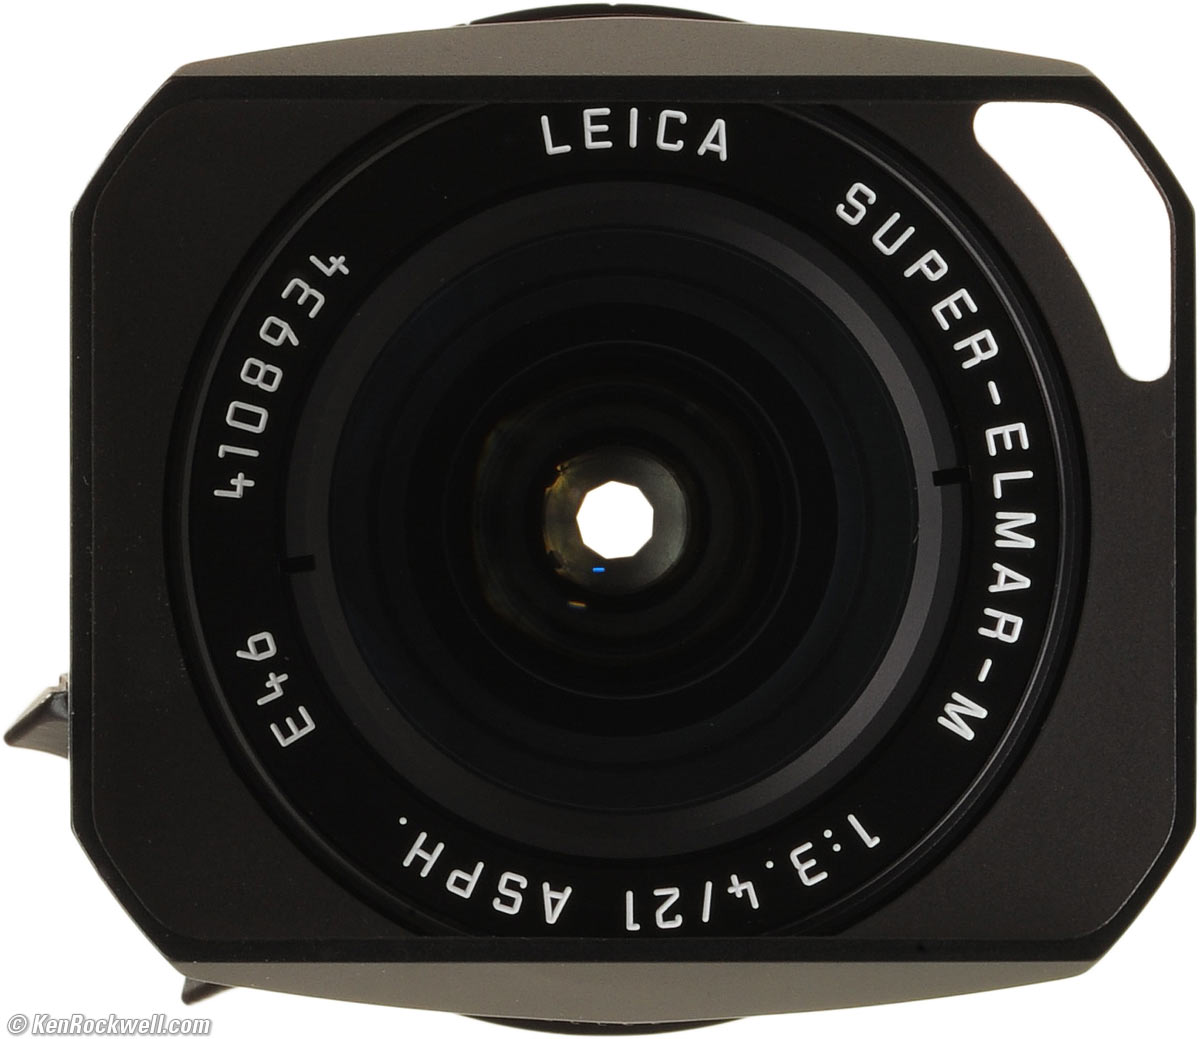 LEICA SUPER-ELMAR-M 21mm f/3.4 ASPH